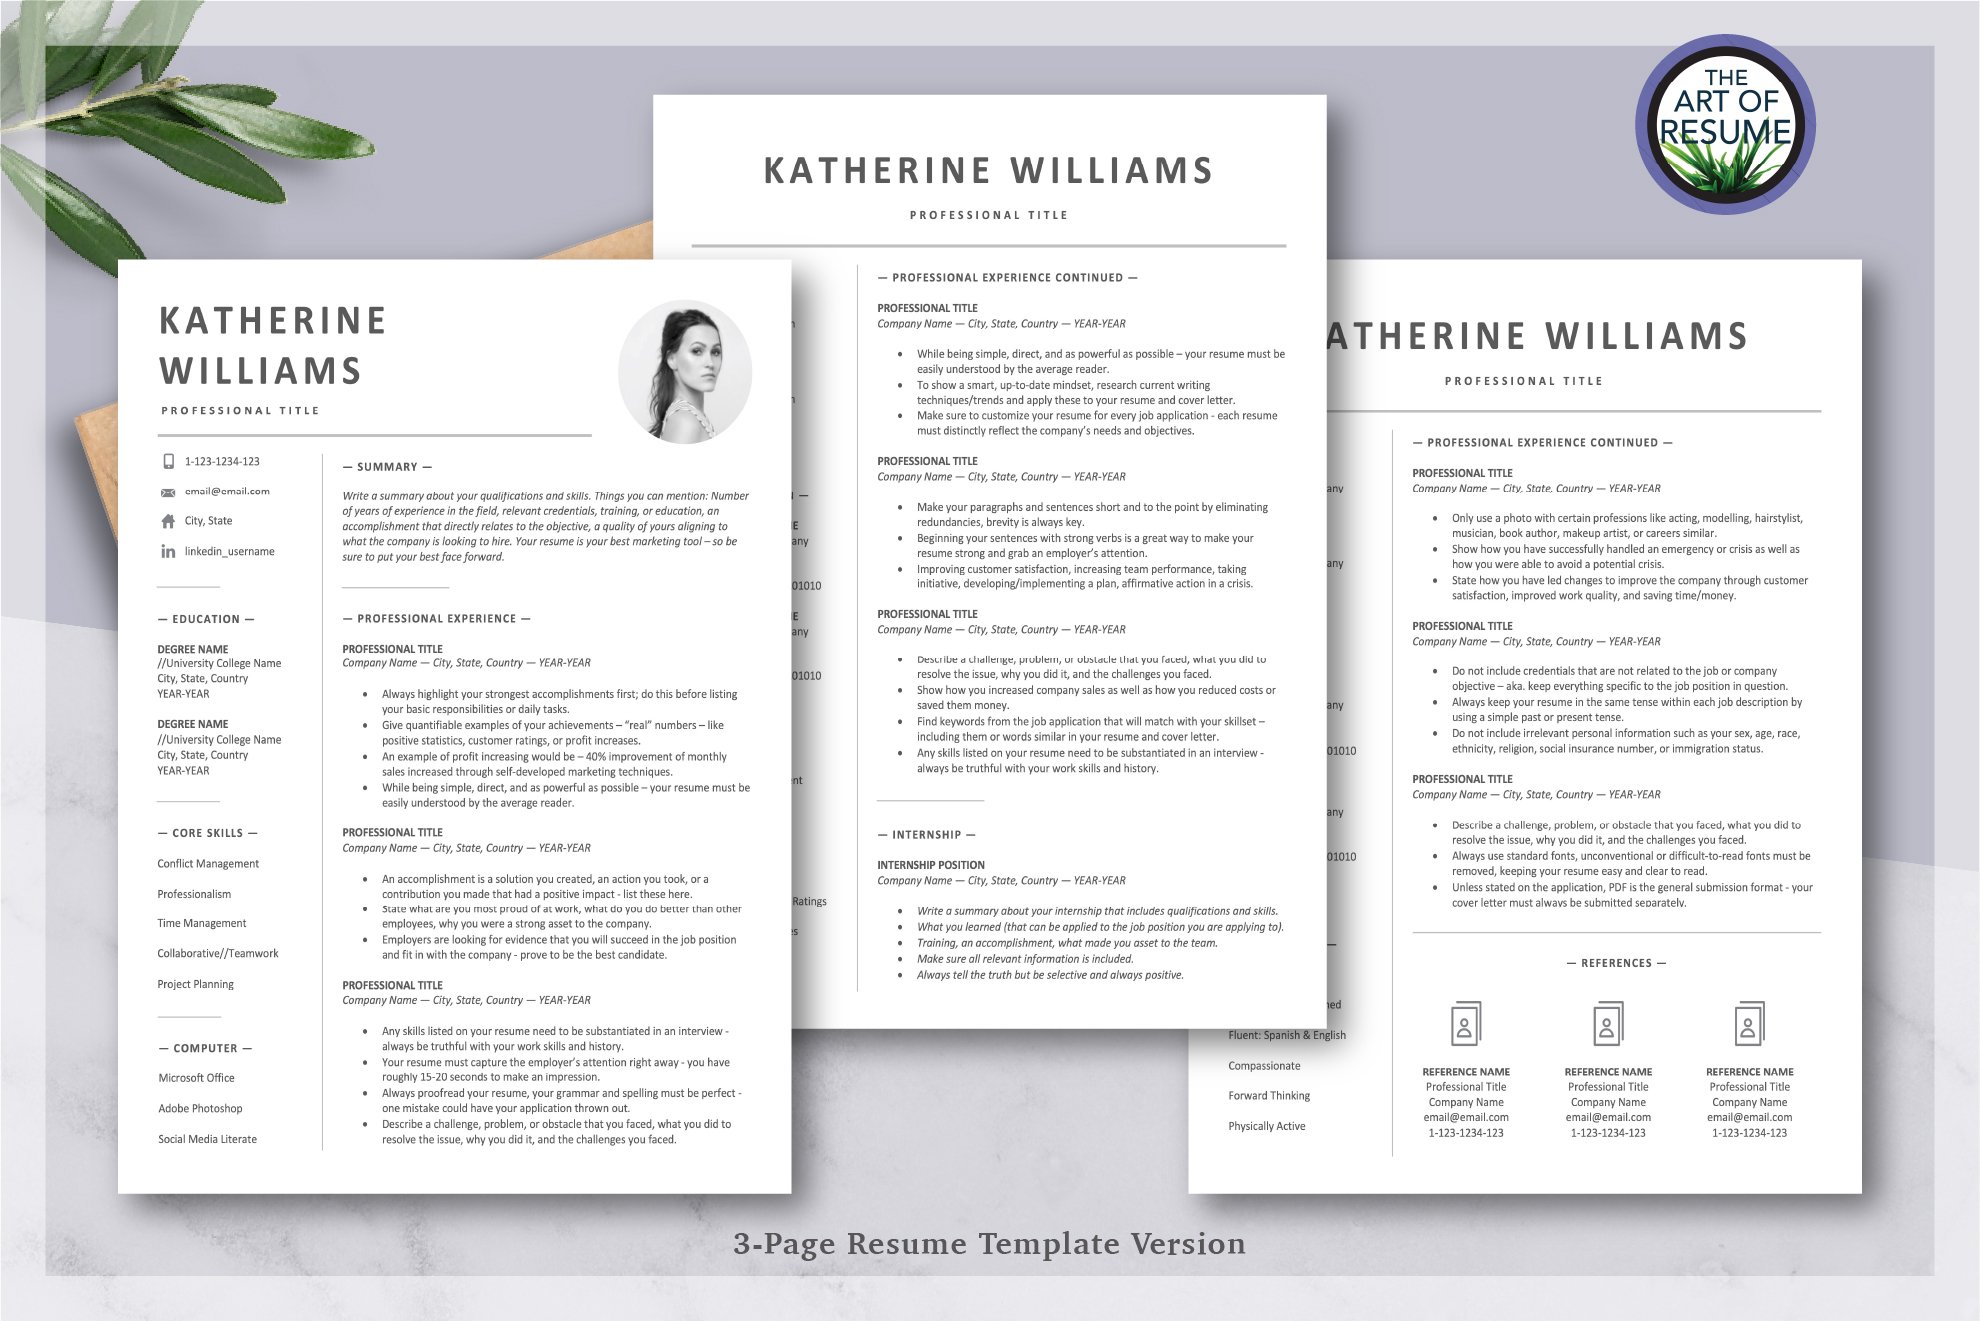 4 resume template design 910